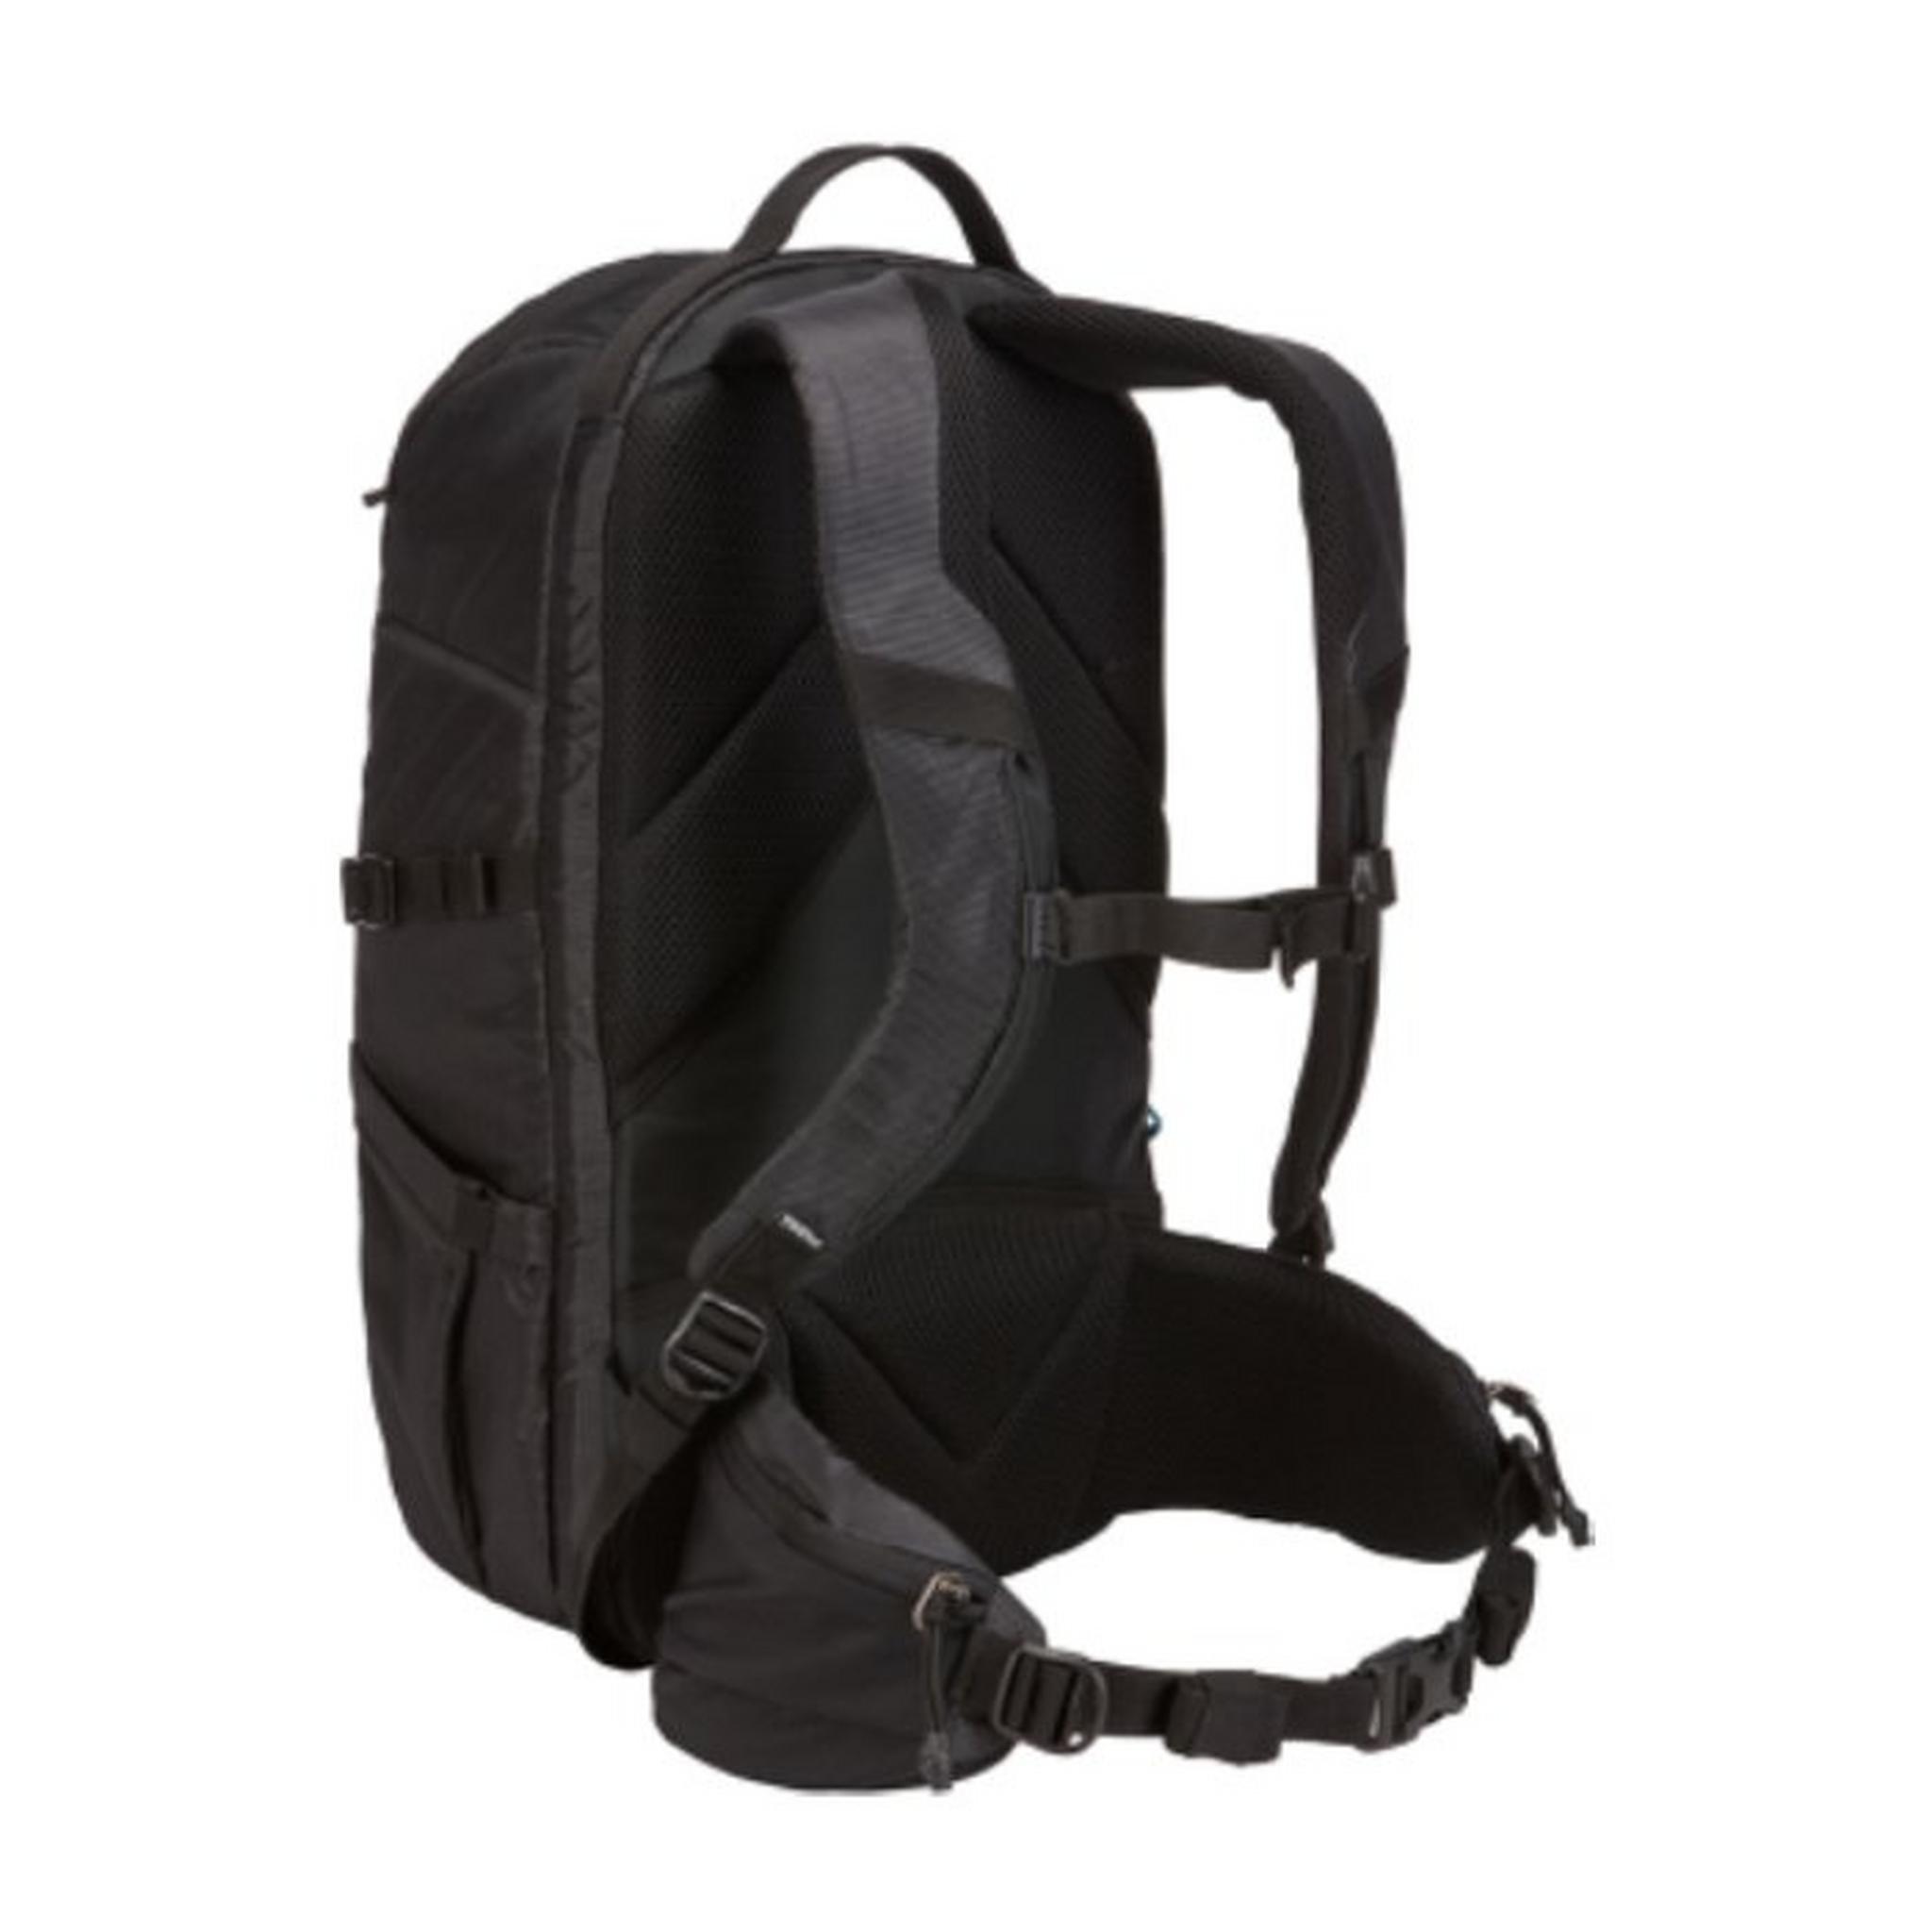 Thule Aspect DSLR Camera Backpack - Black